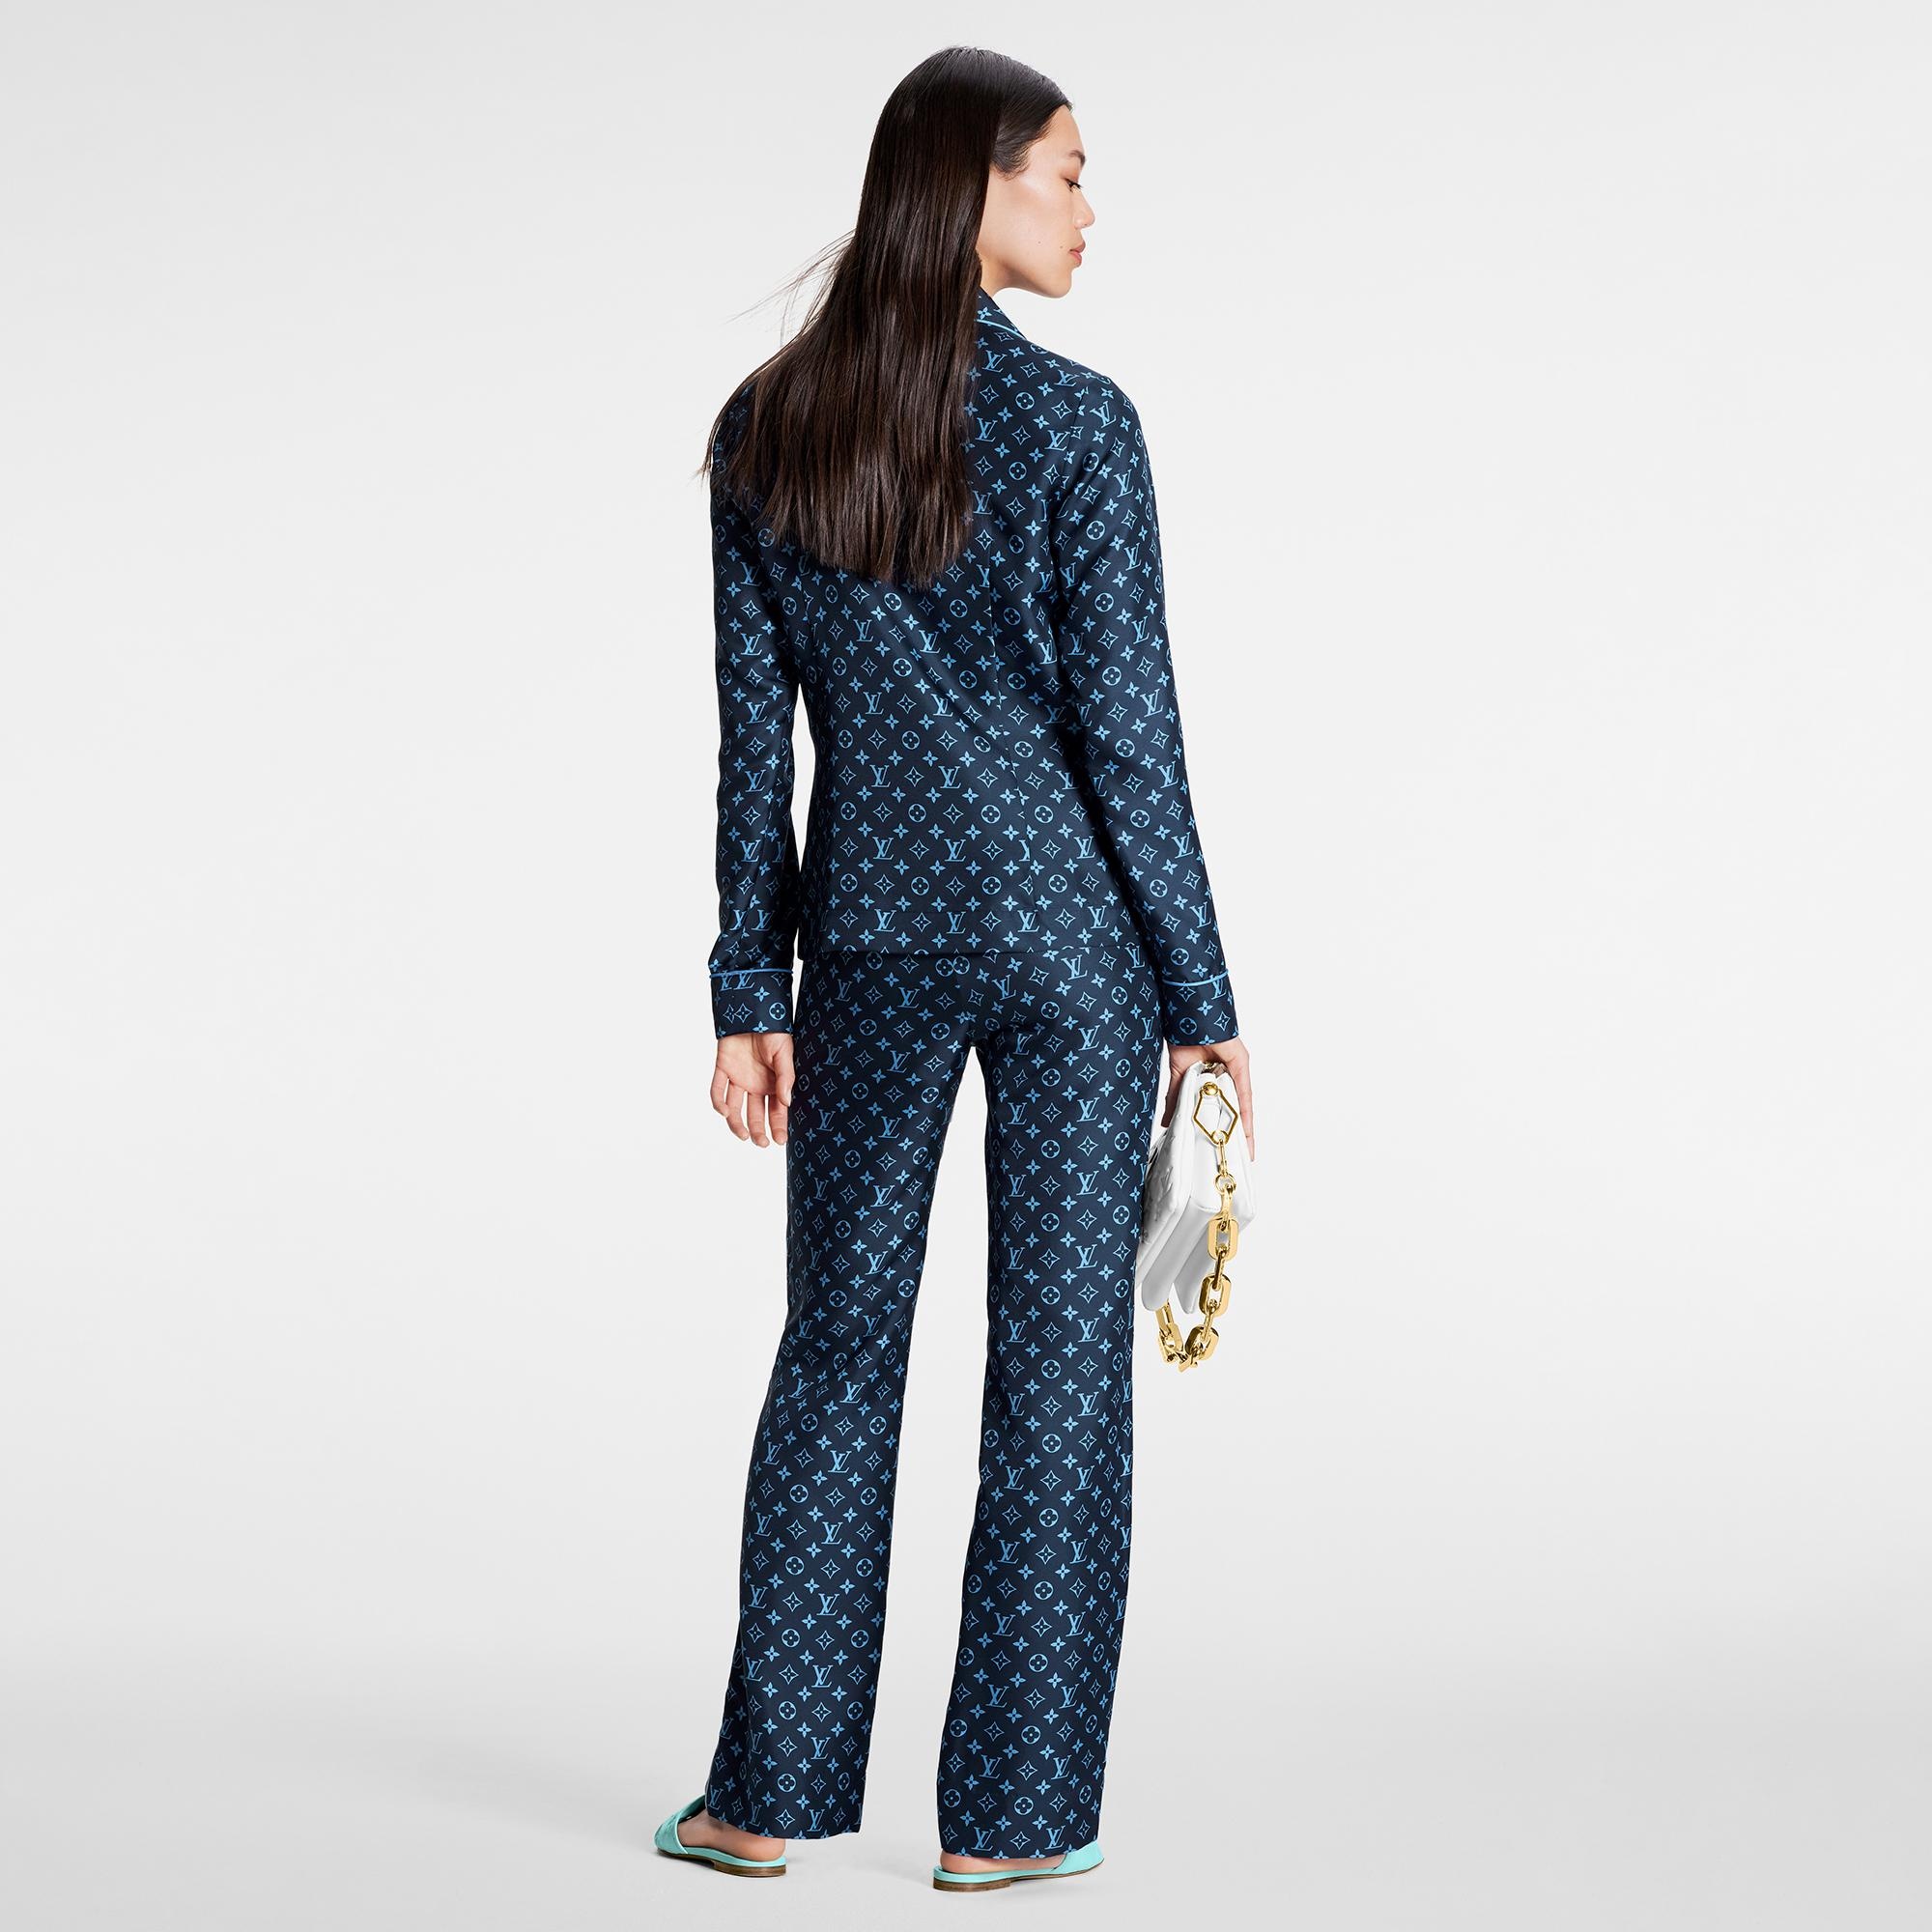 NWT Louis Vuitton Midnight Mixed Monogram Pajama Shirt Size F 34/US 2  $1,950